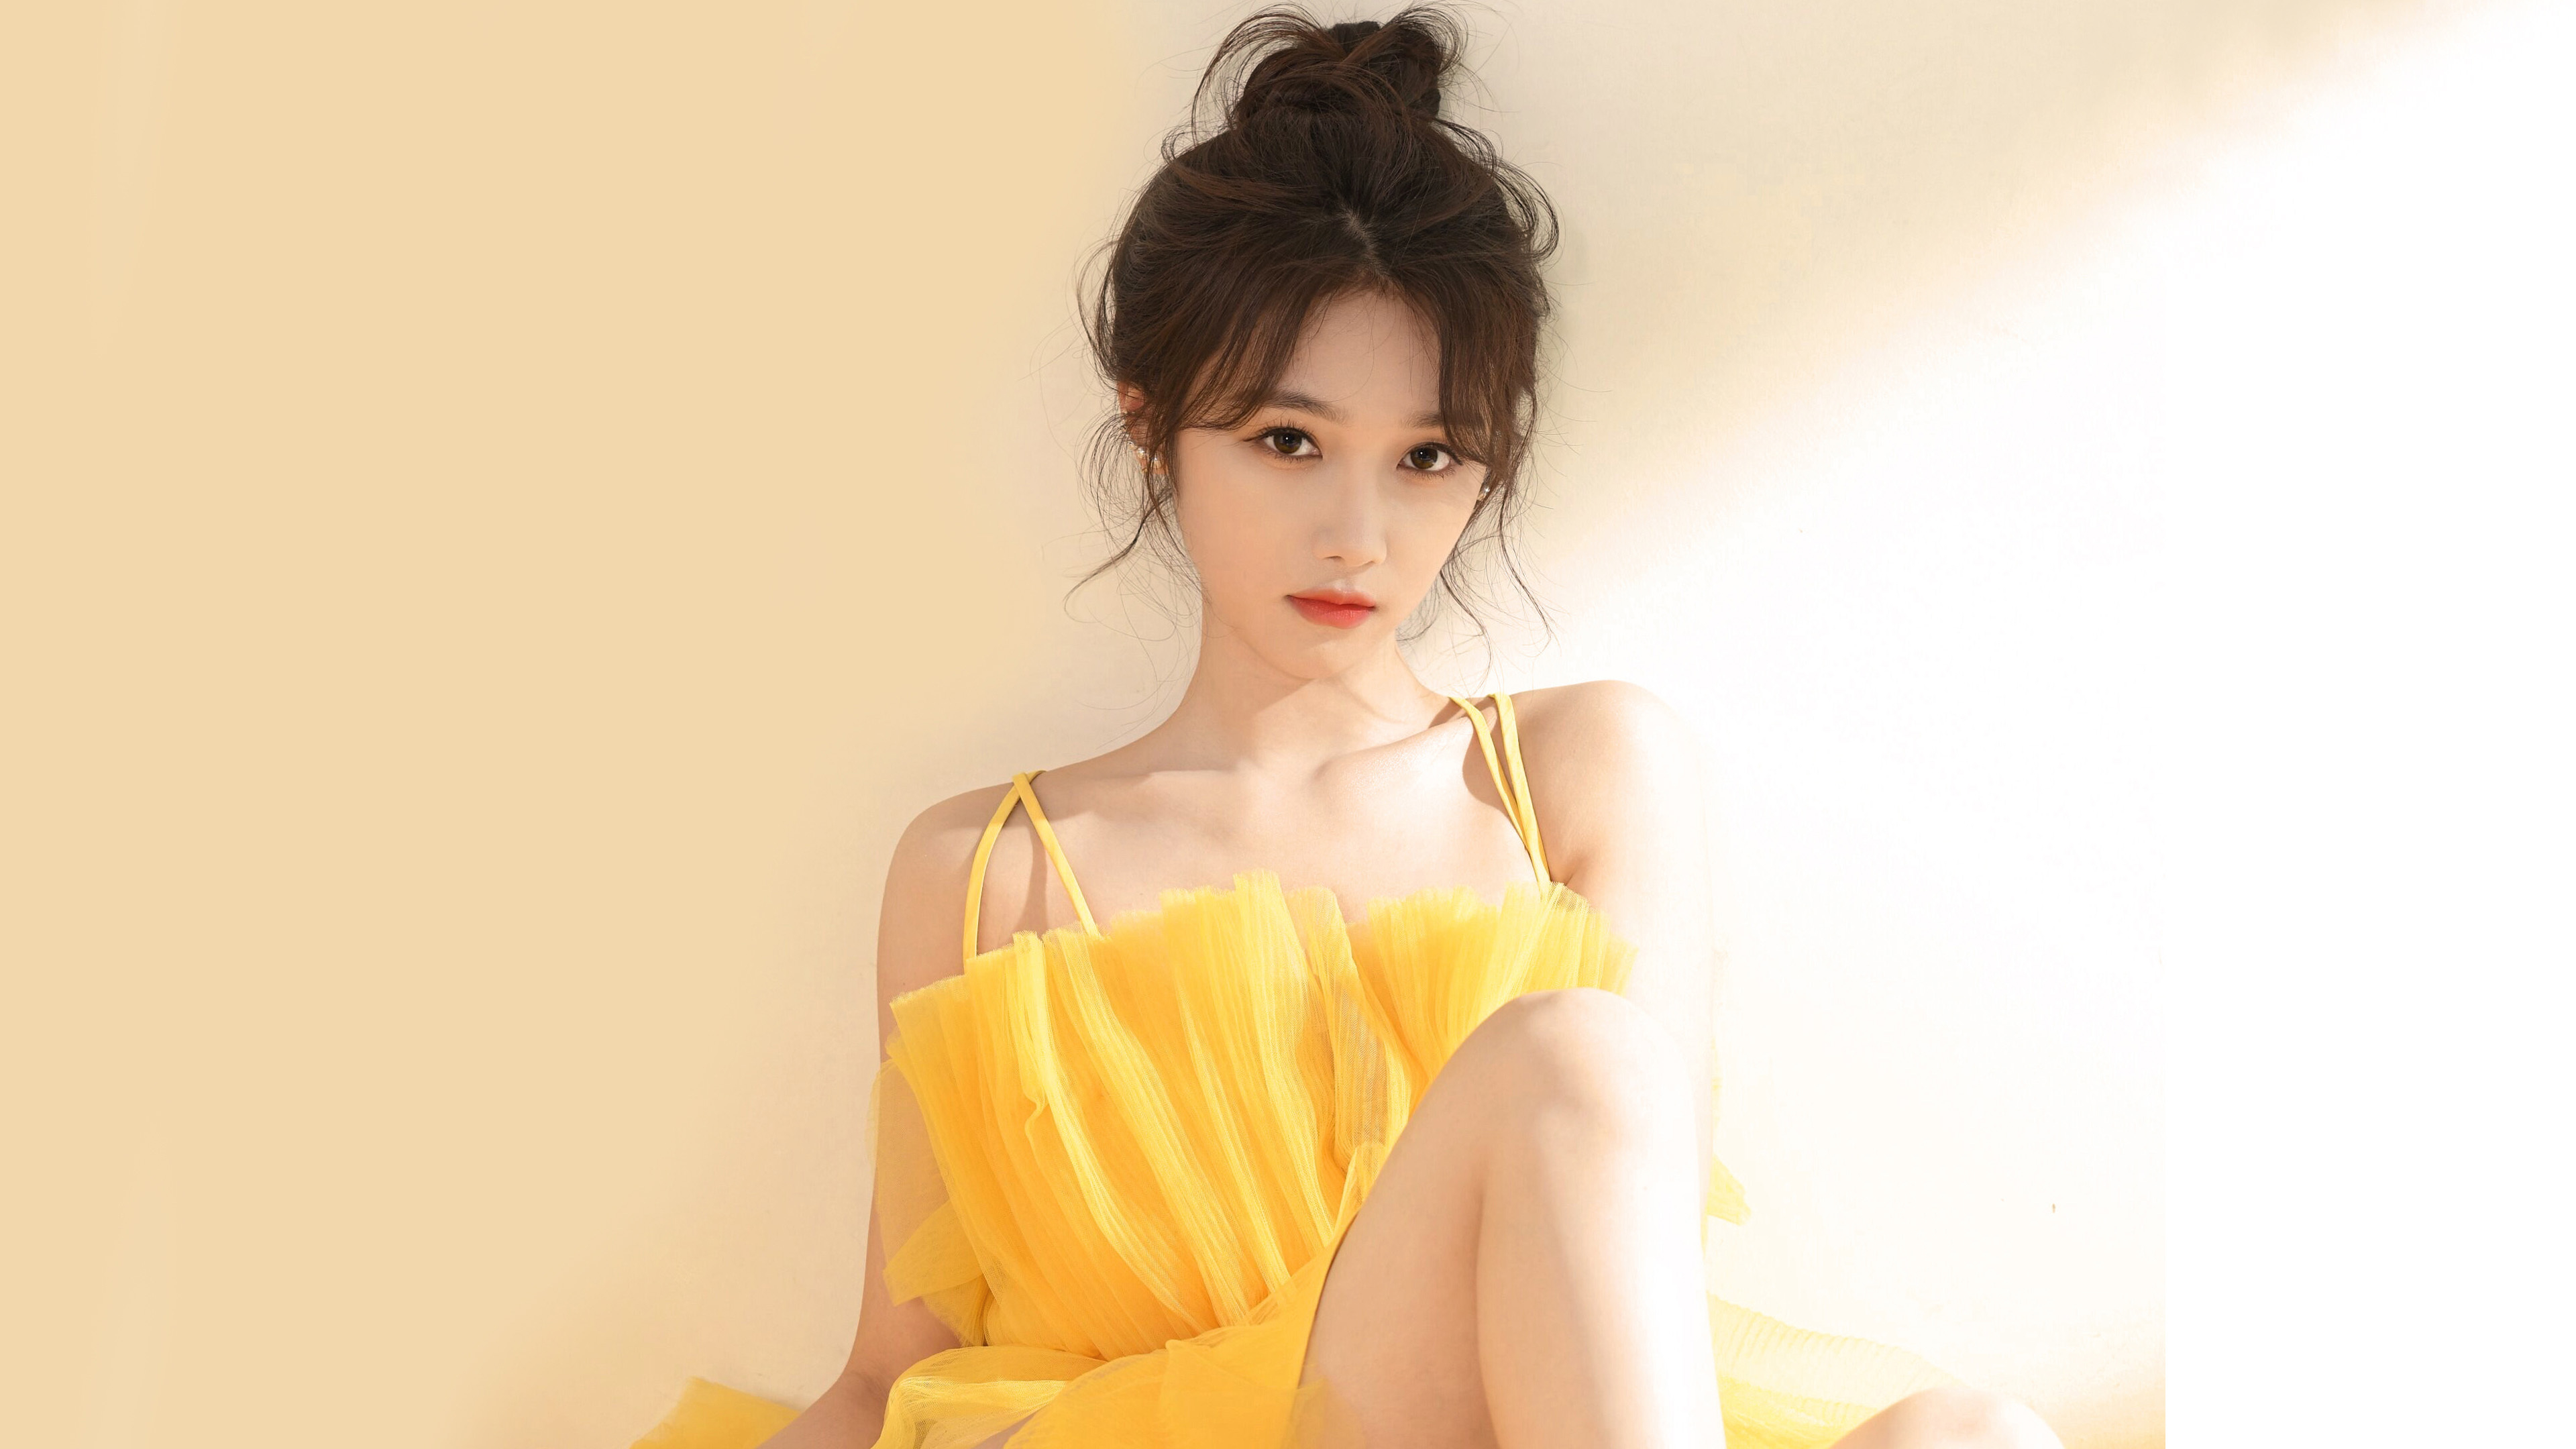 Model Asian Women Yellow Dress Leaning Hair Knot Simple Background Portrait 3840x2160